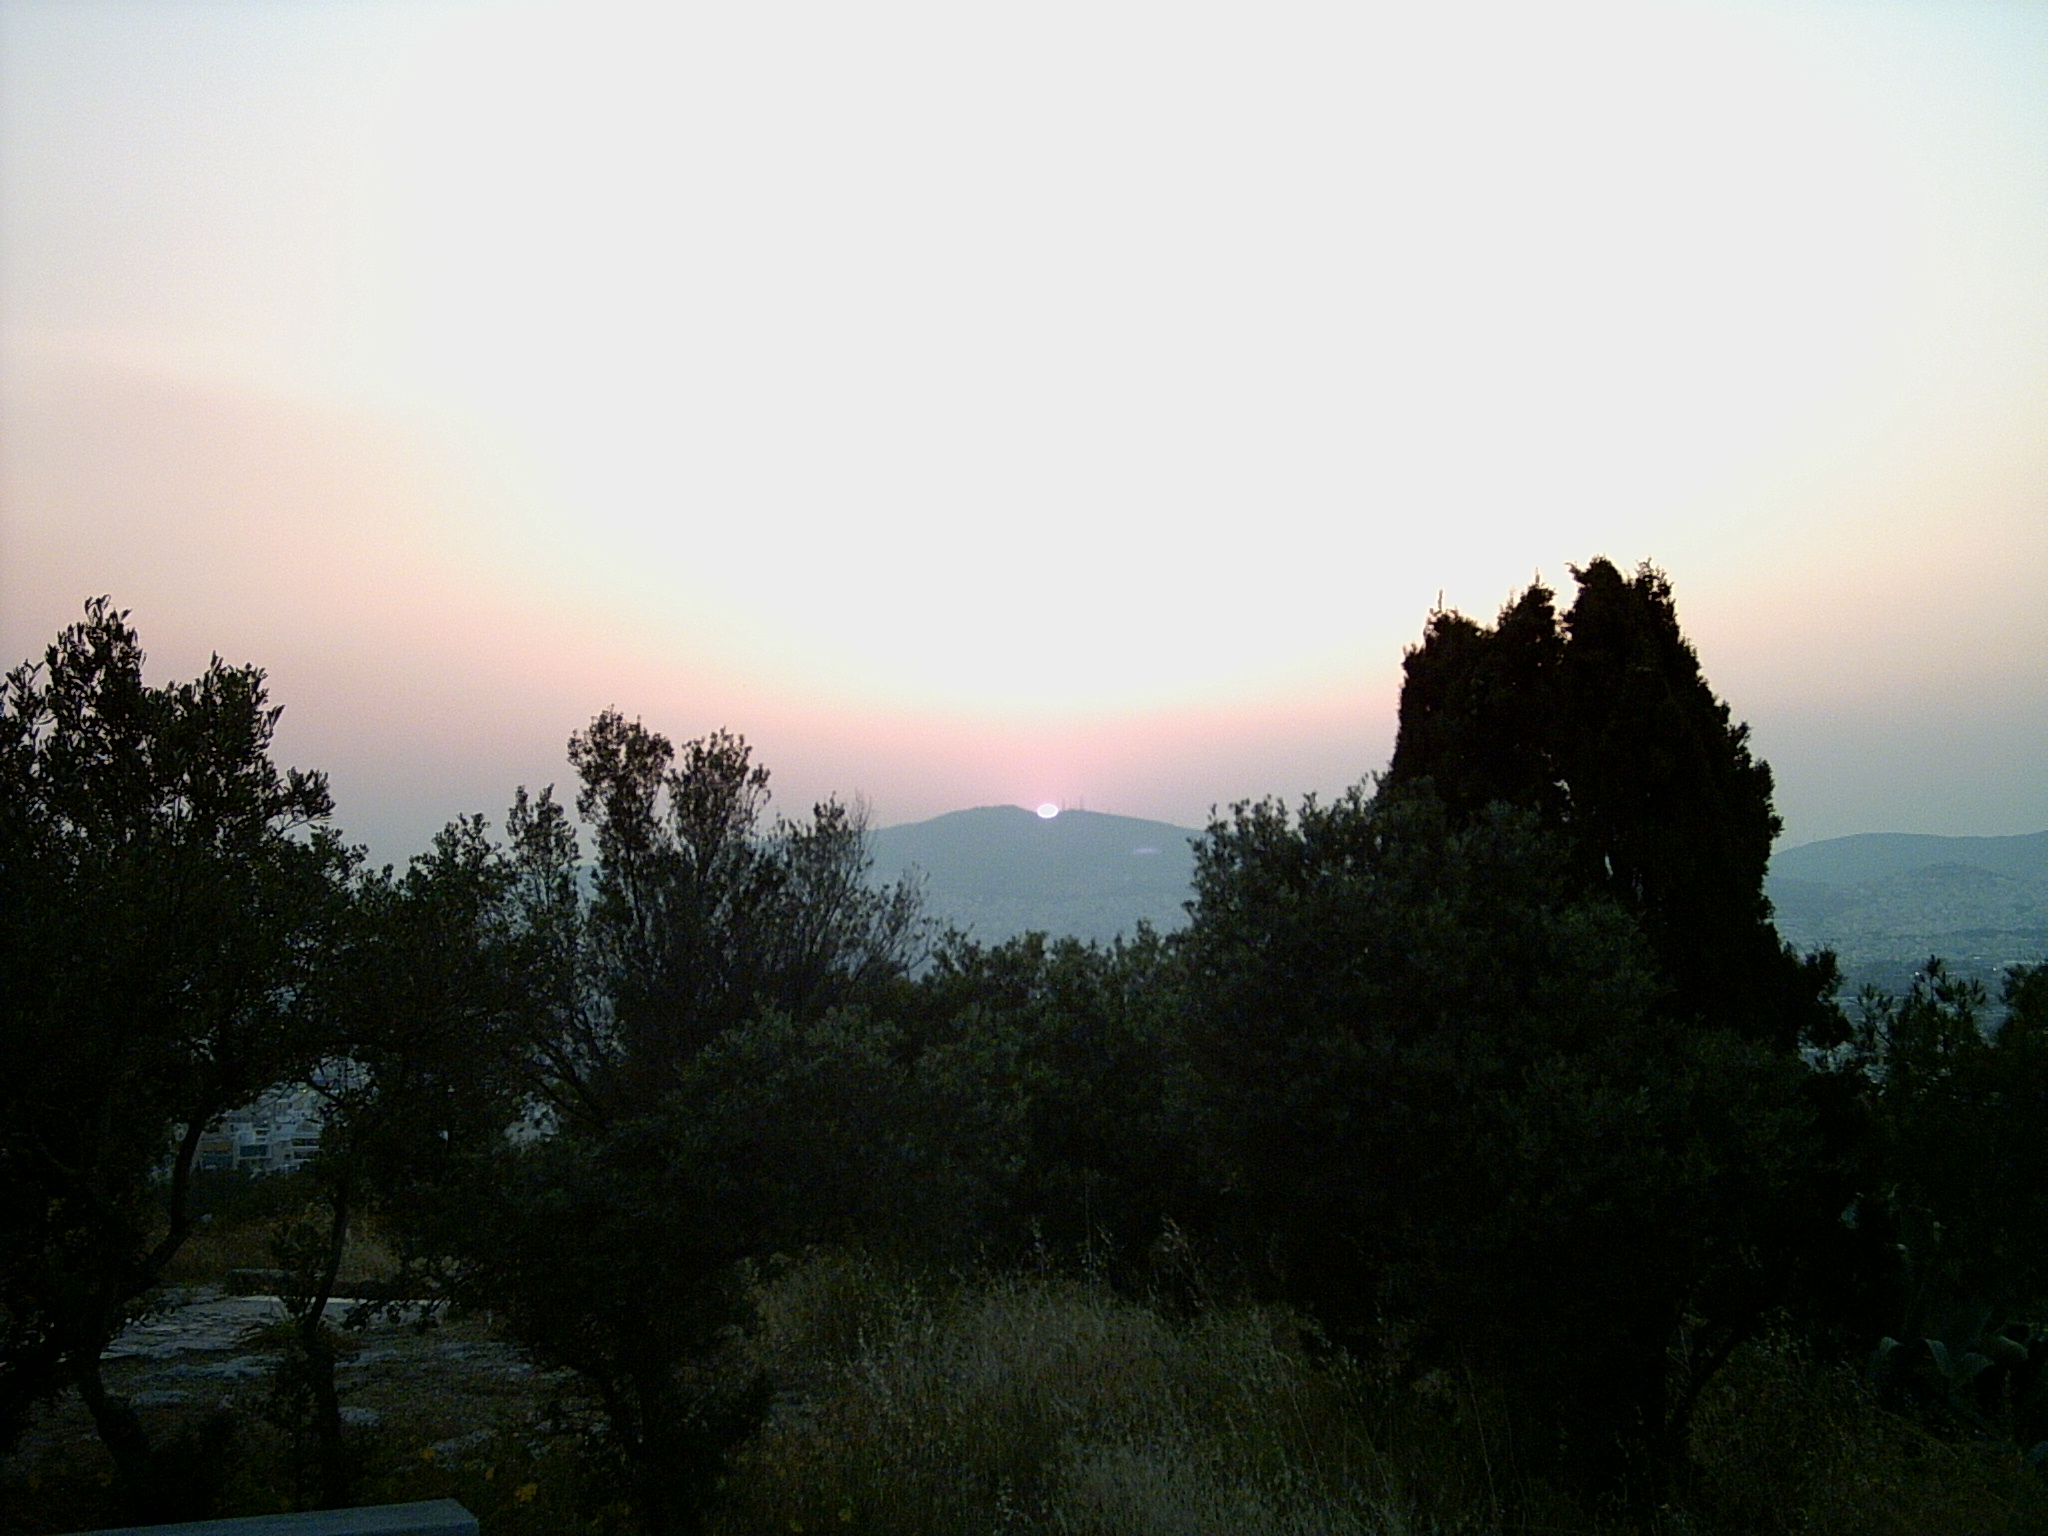 Athény květen 2006 západ Slunce 266.jpg